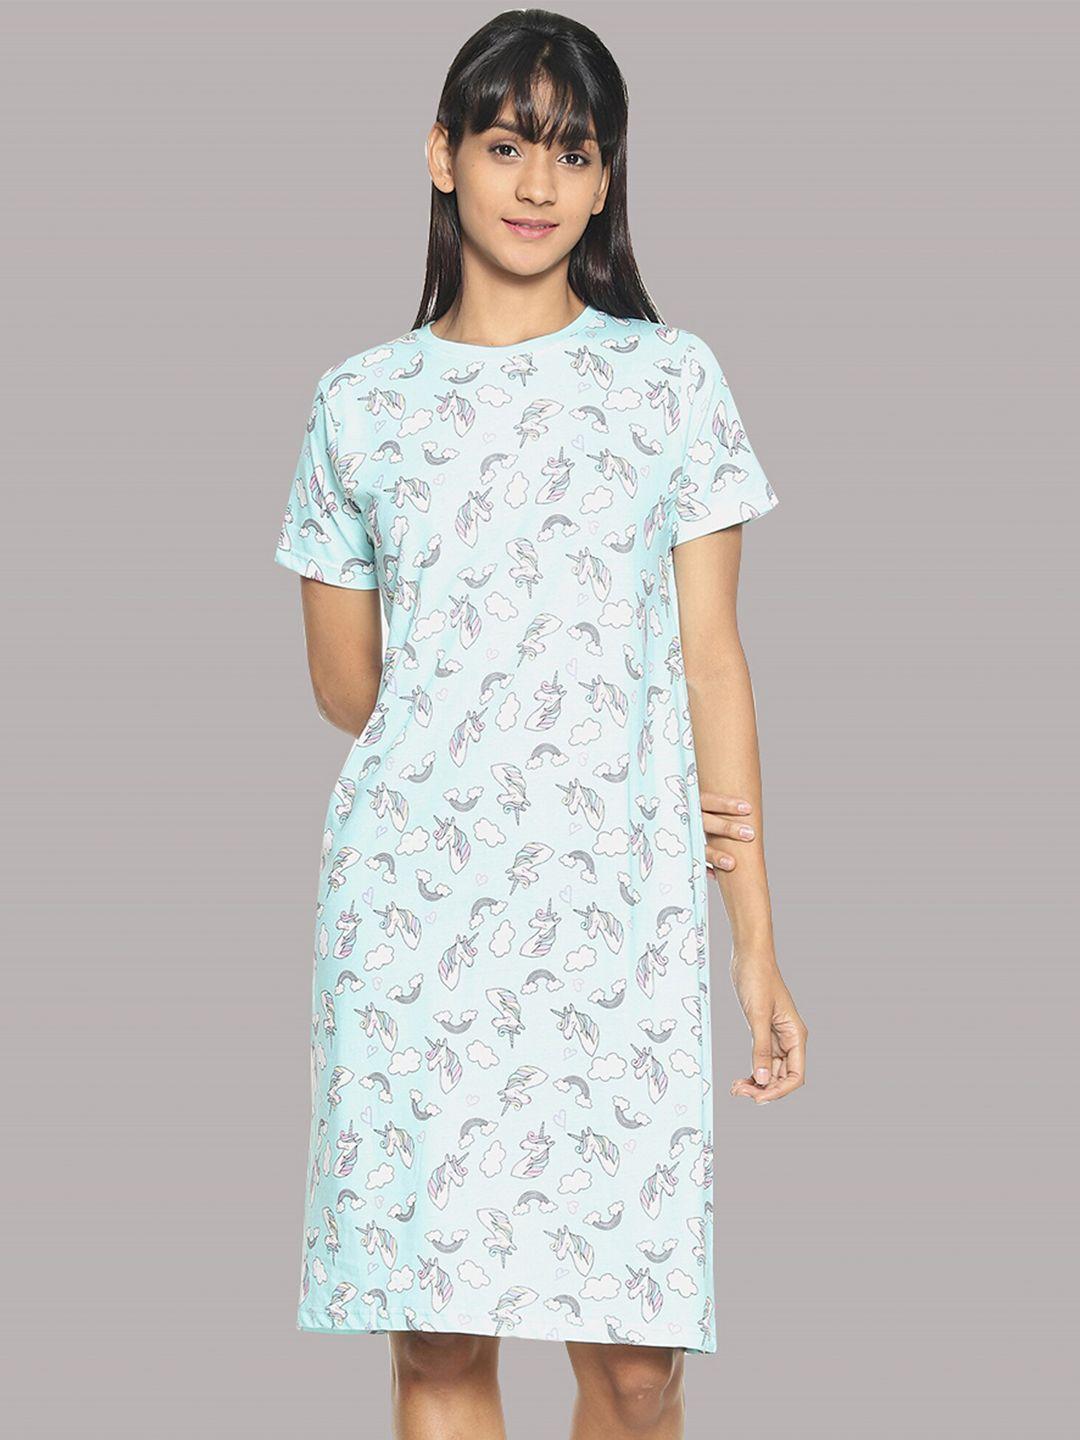 kryptic-printed-pure-cotton-round-neck-t-shirt-nightdress